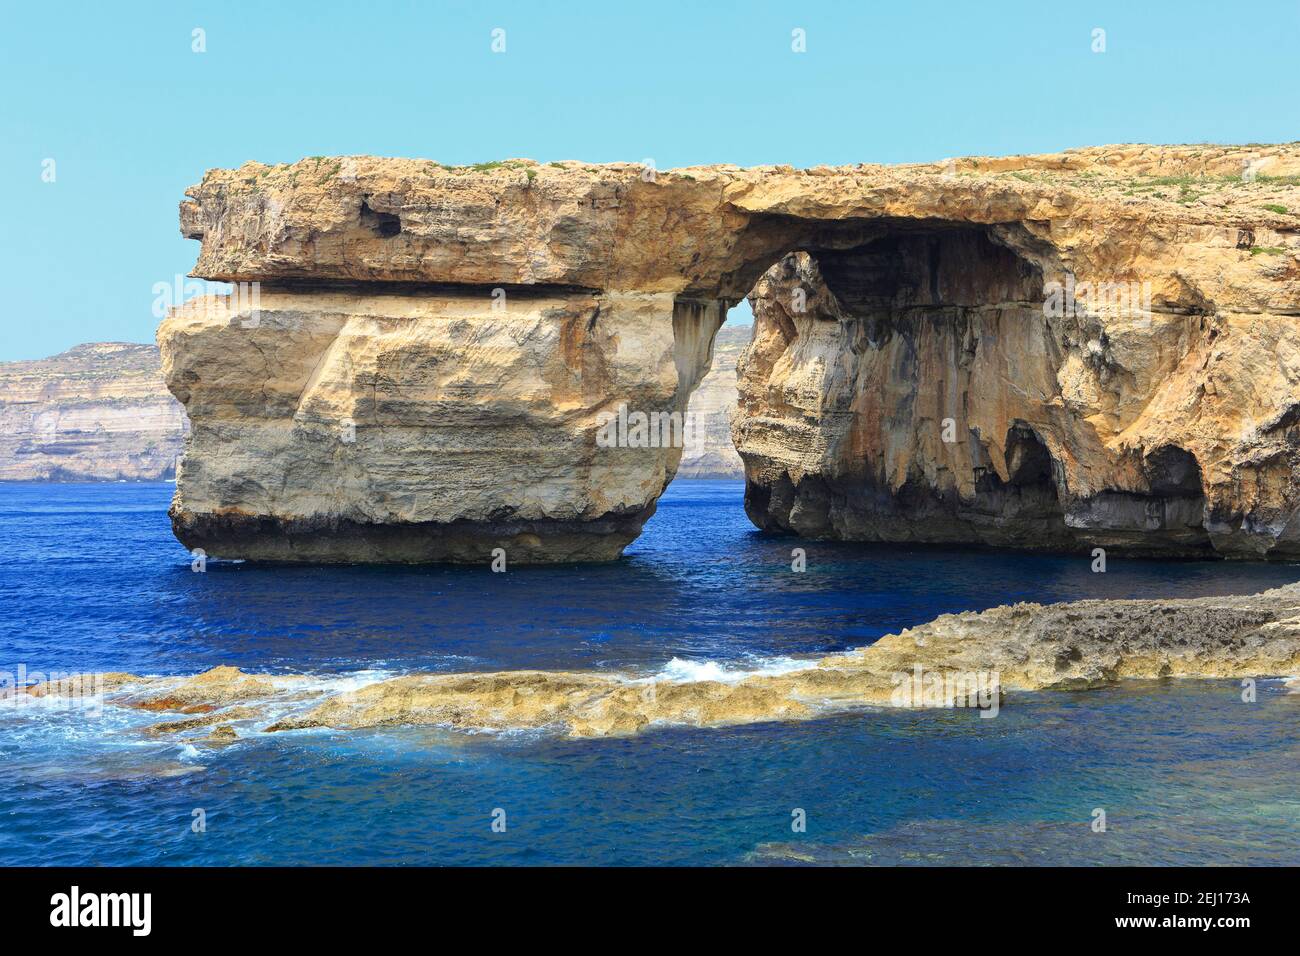 The Azure Window on the Island of Gozo in Malta Stock Photo